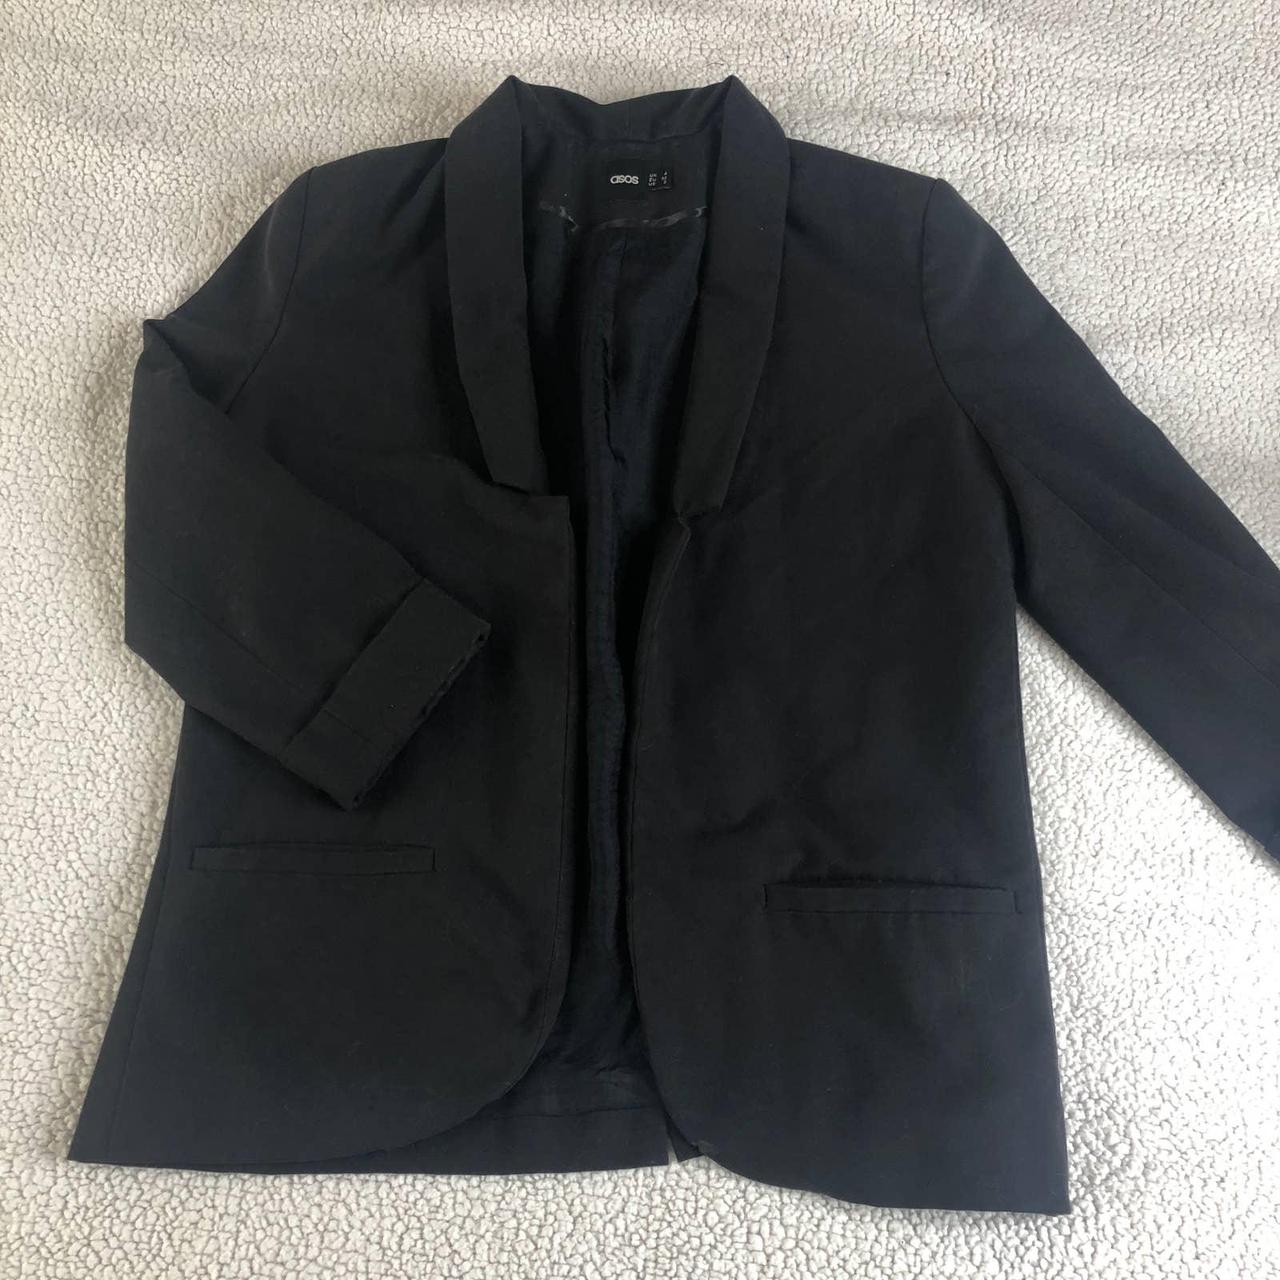 Product Image 2 - ASOS black professional blazer

DETAIL: black